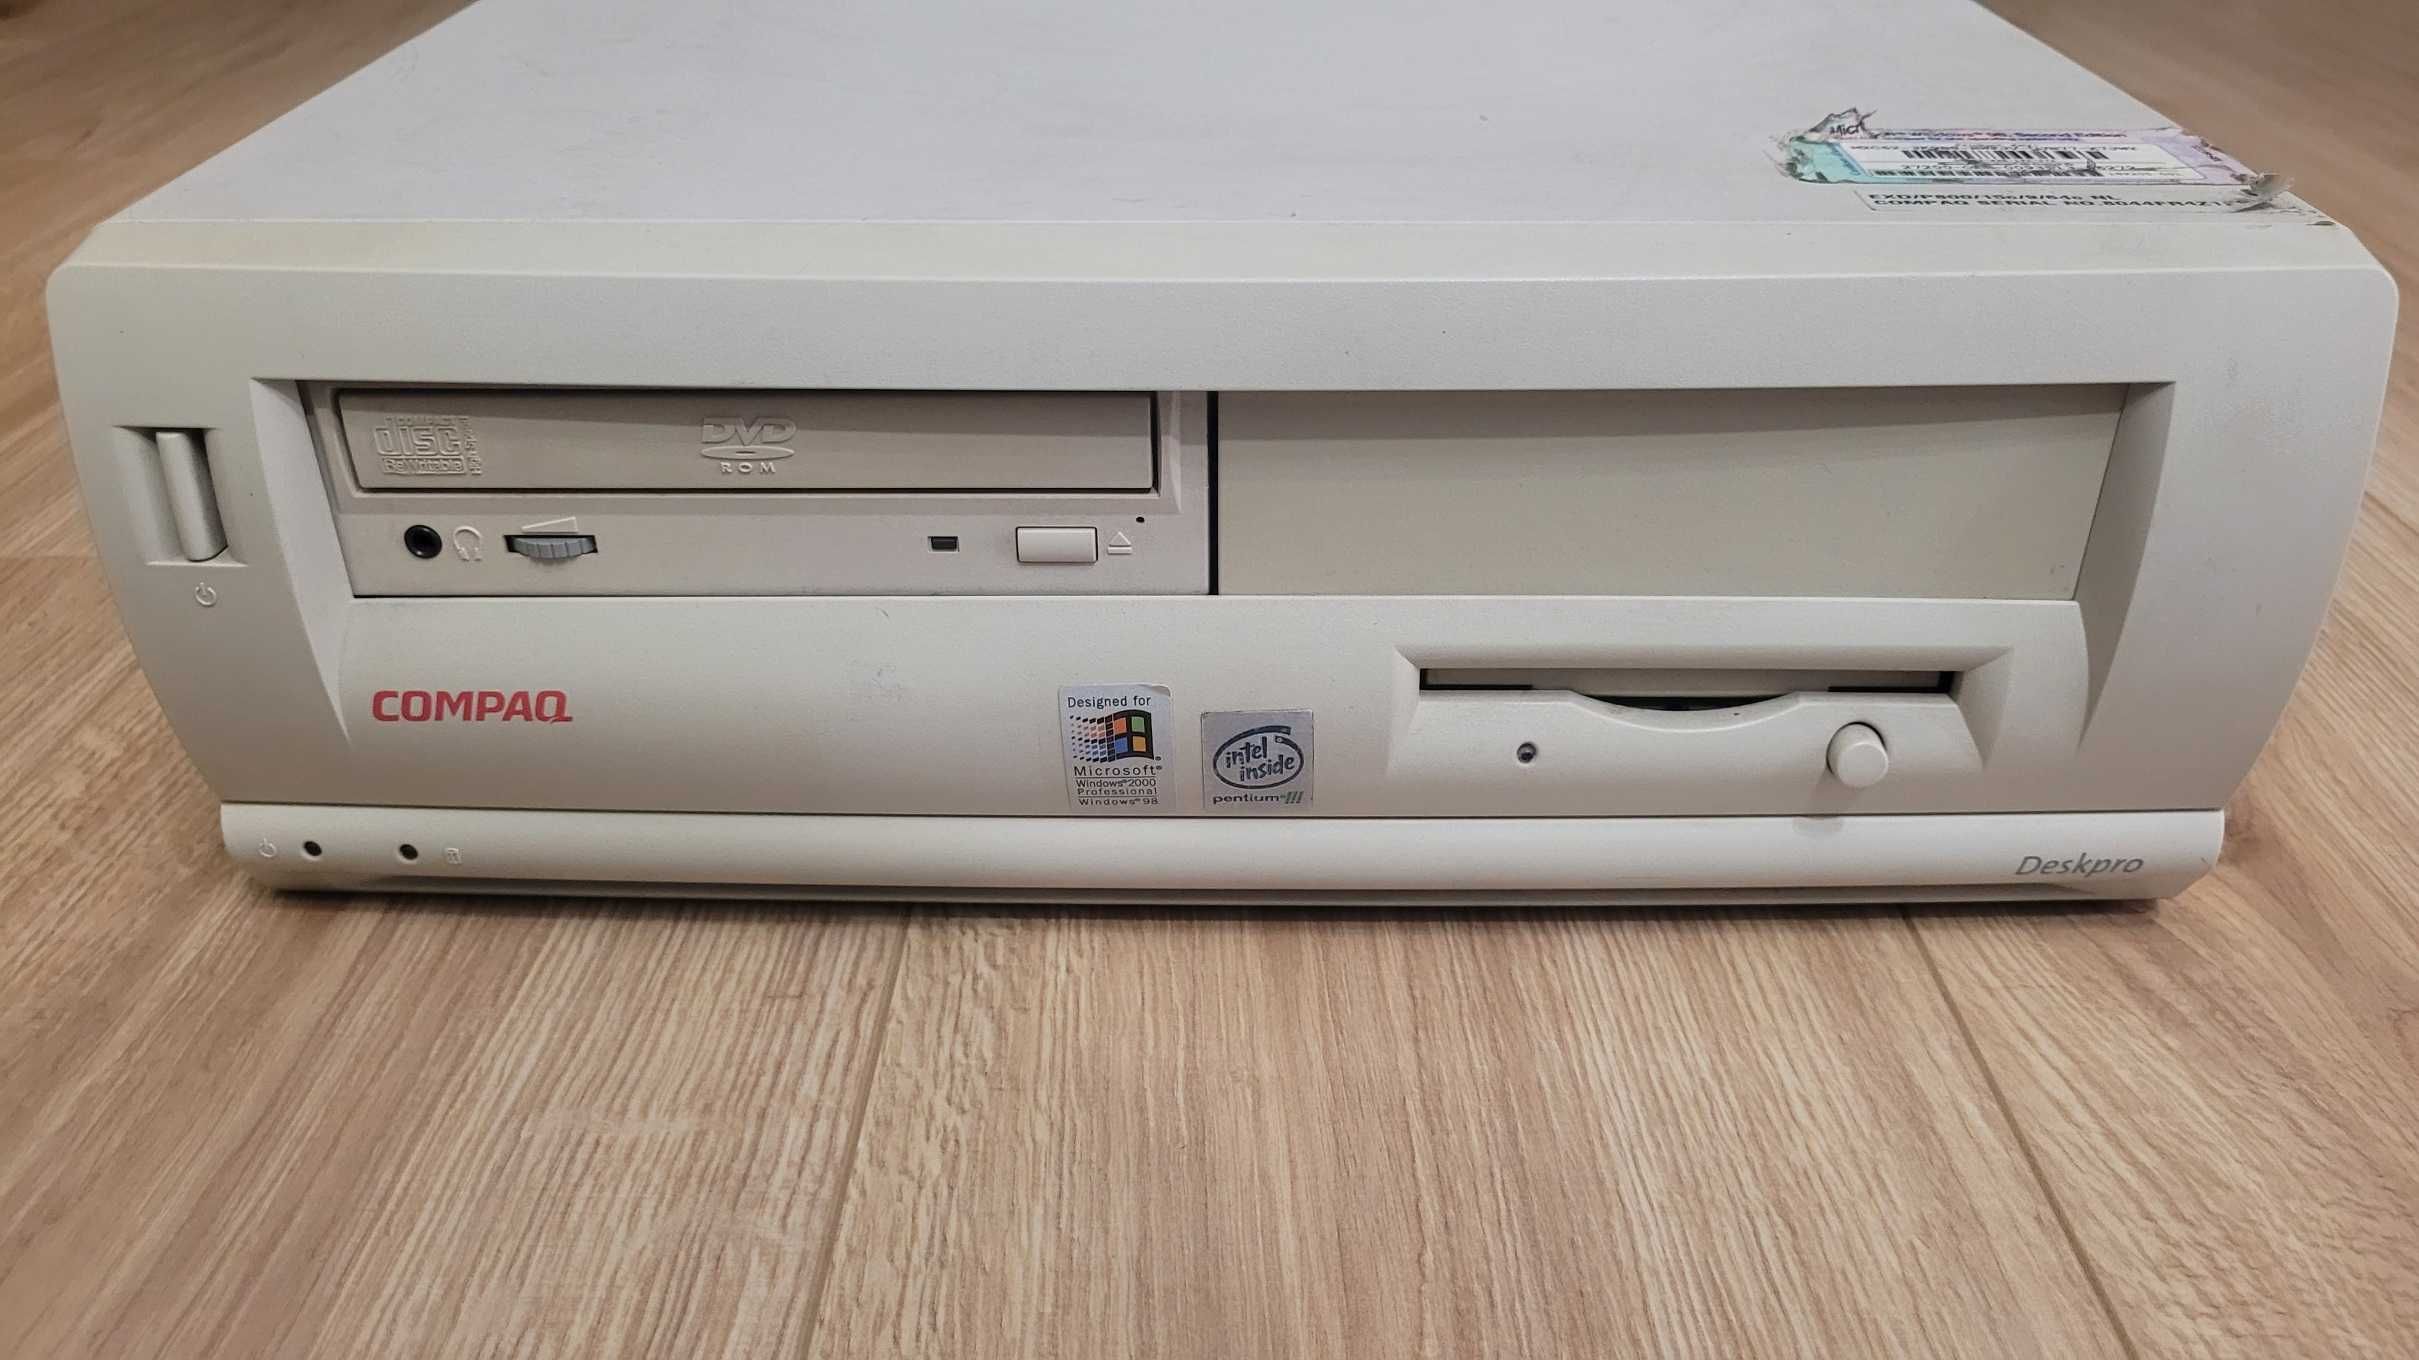 OKAZJA !! Compaq Deskpro Pentium III 800MHz 512MB 20GB sprawny klasyk